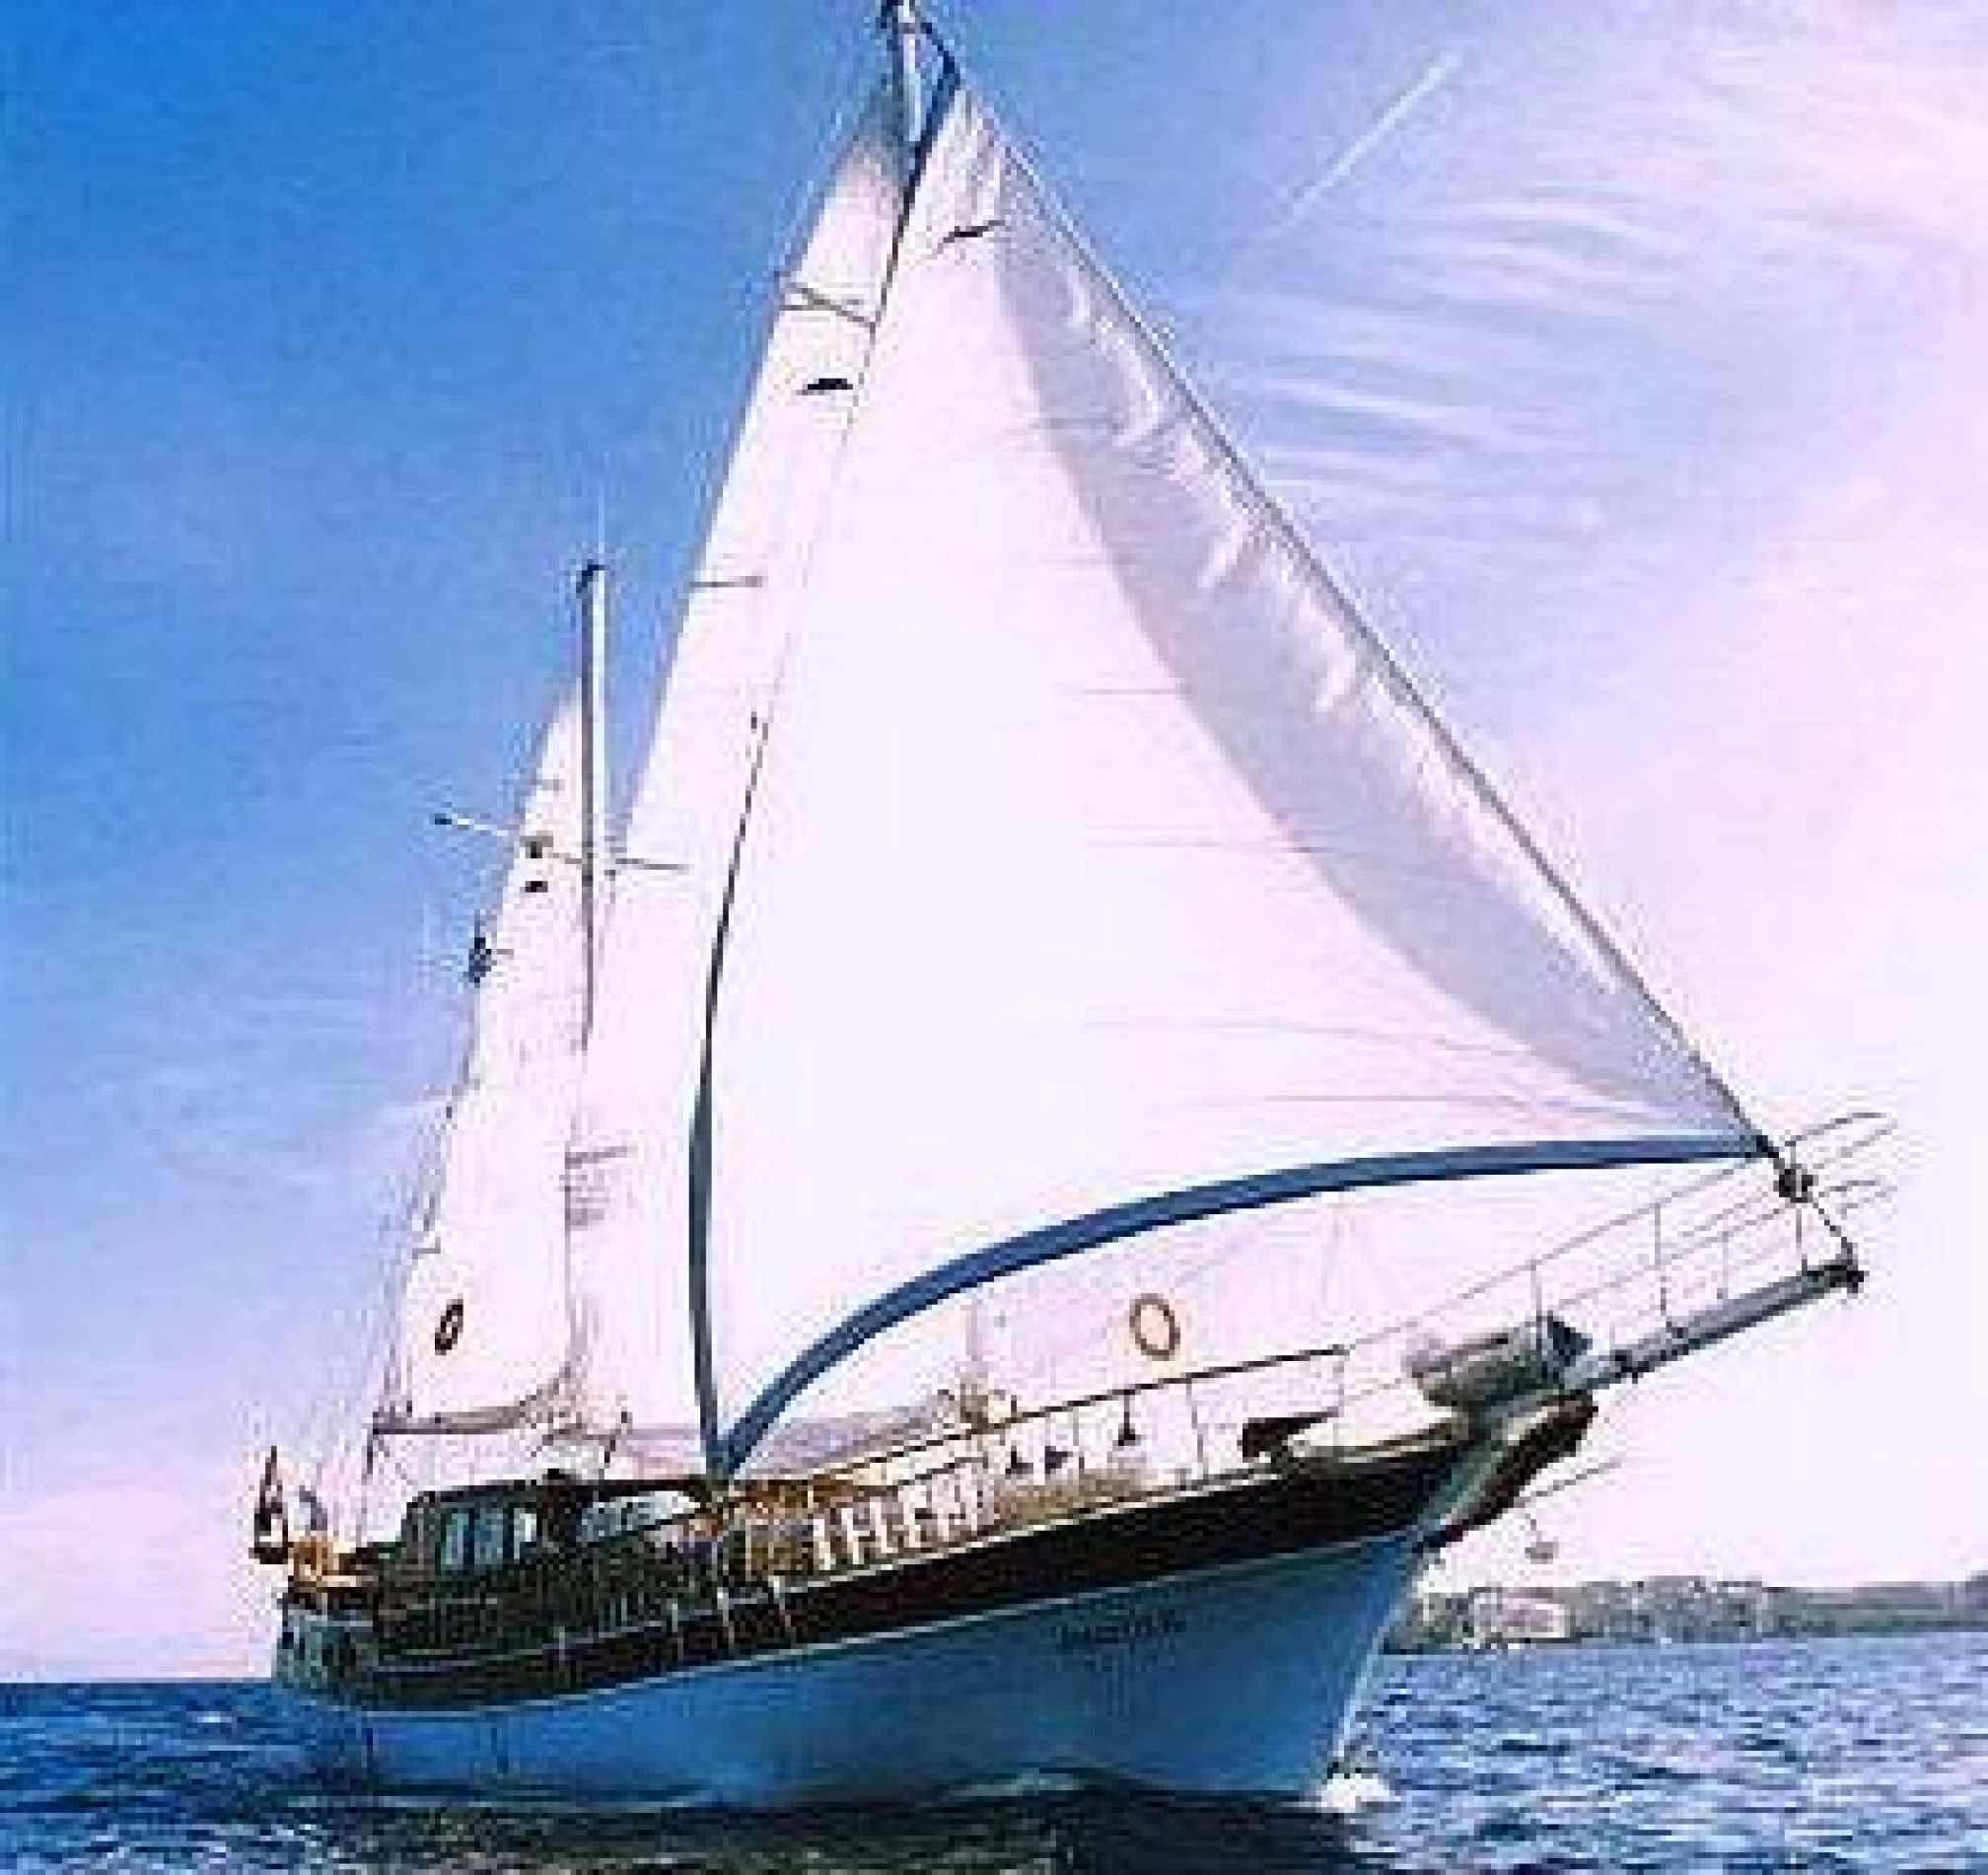 Anatolie gulet charter sailing